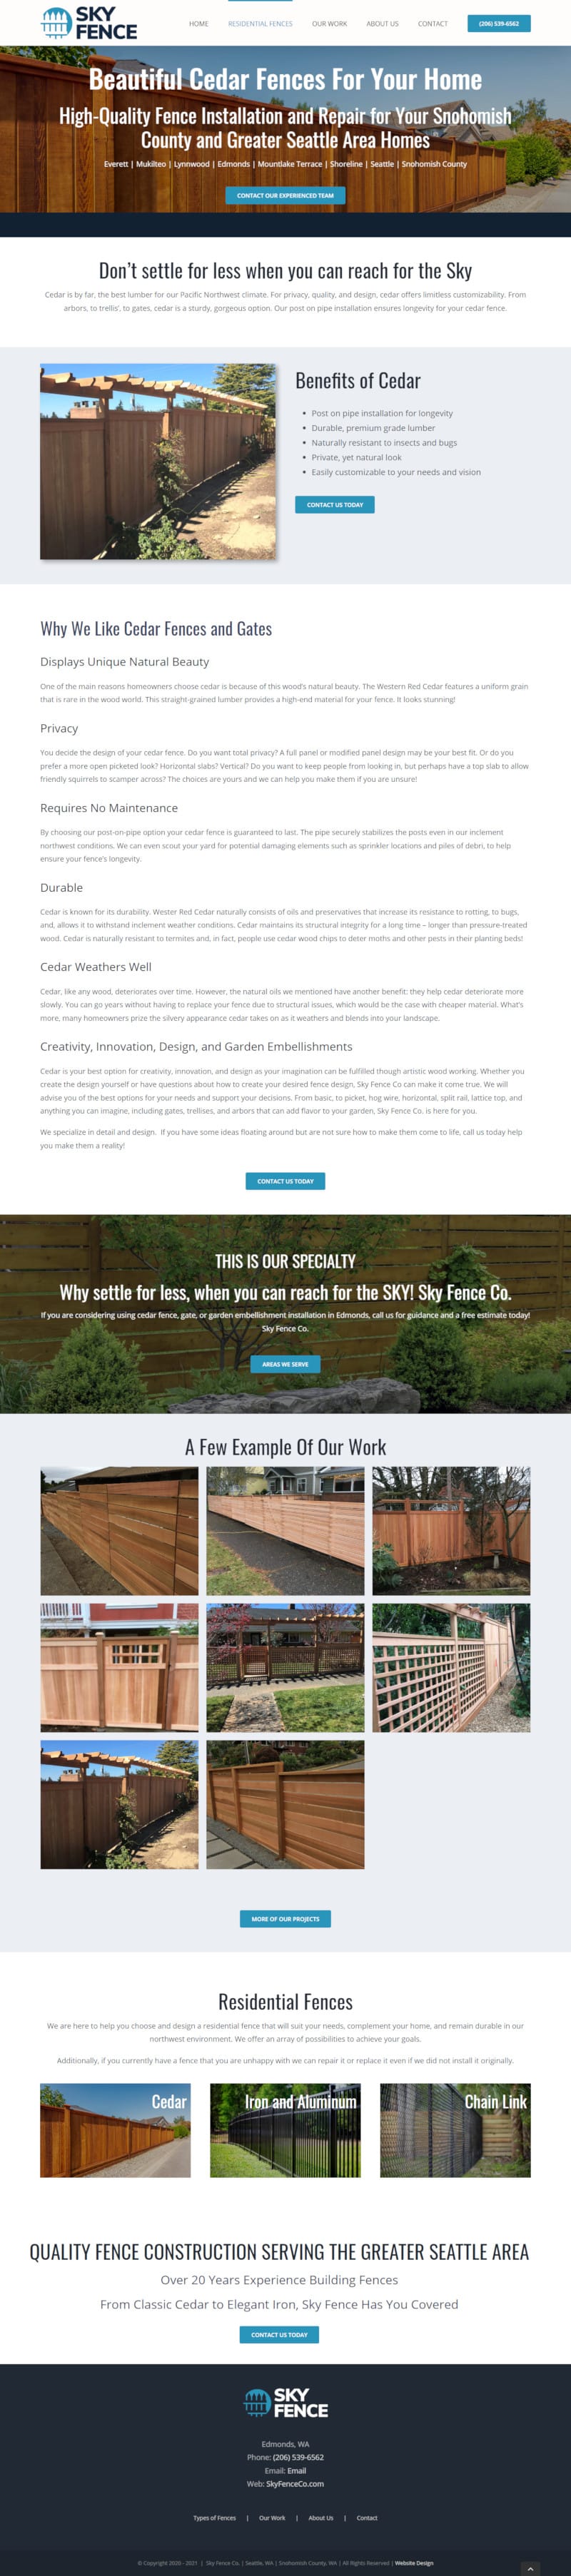 Sky Fence Company Cedar Fence website page design